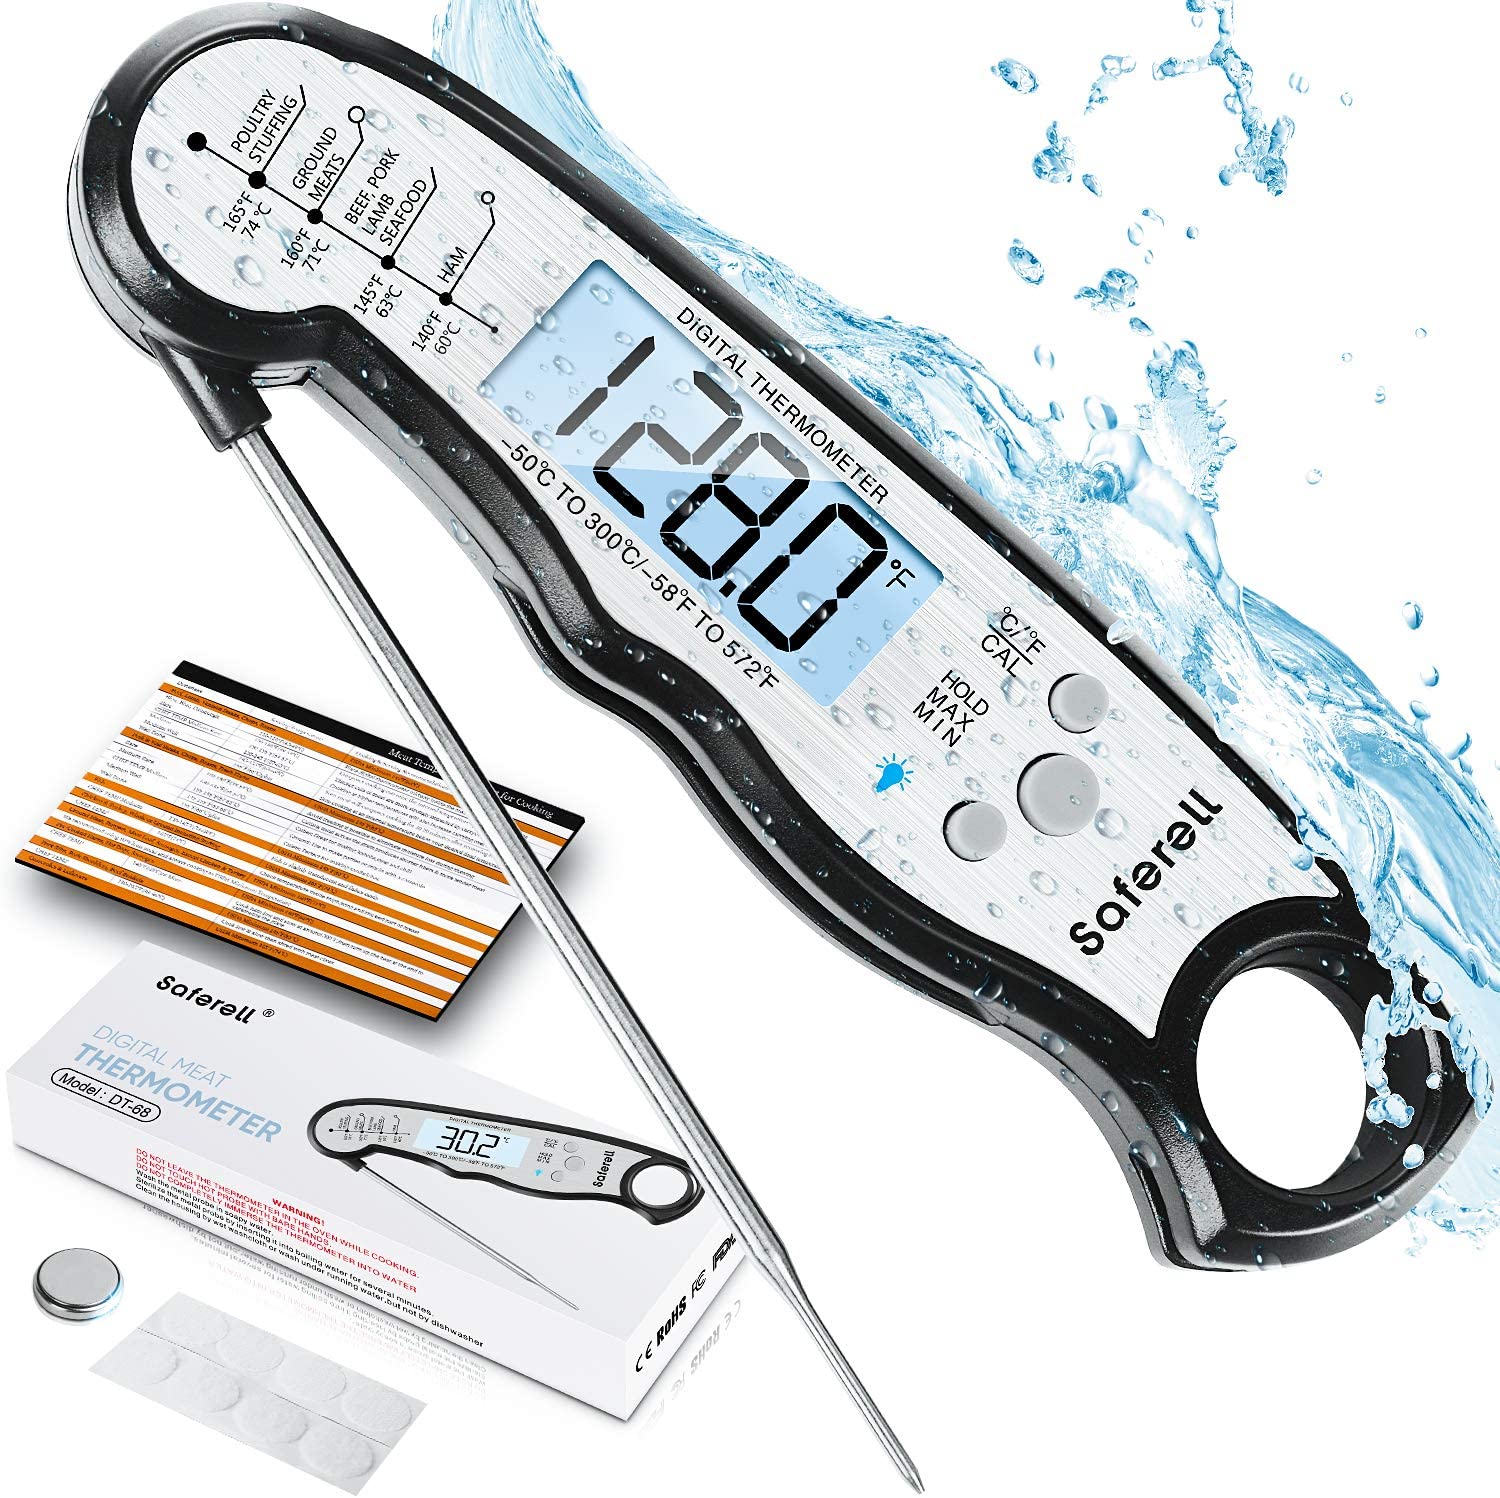 https://www.dontwasteyourmoney.com/wp-content/uploads/2020/11/saferell-backlit-instant-read-digital-meat-thermometer-digital-meat-thermometer.jpg